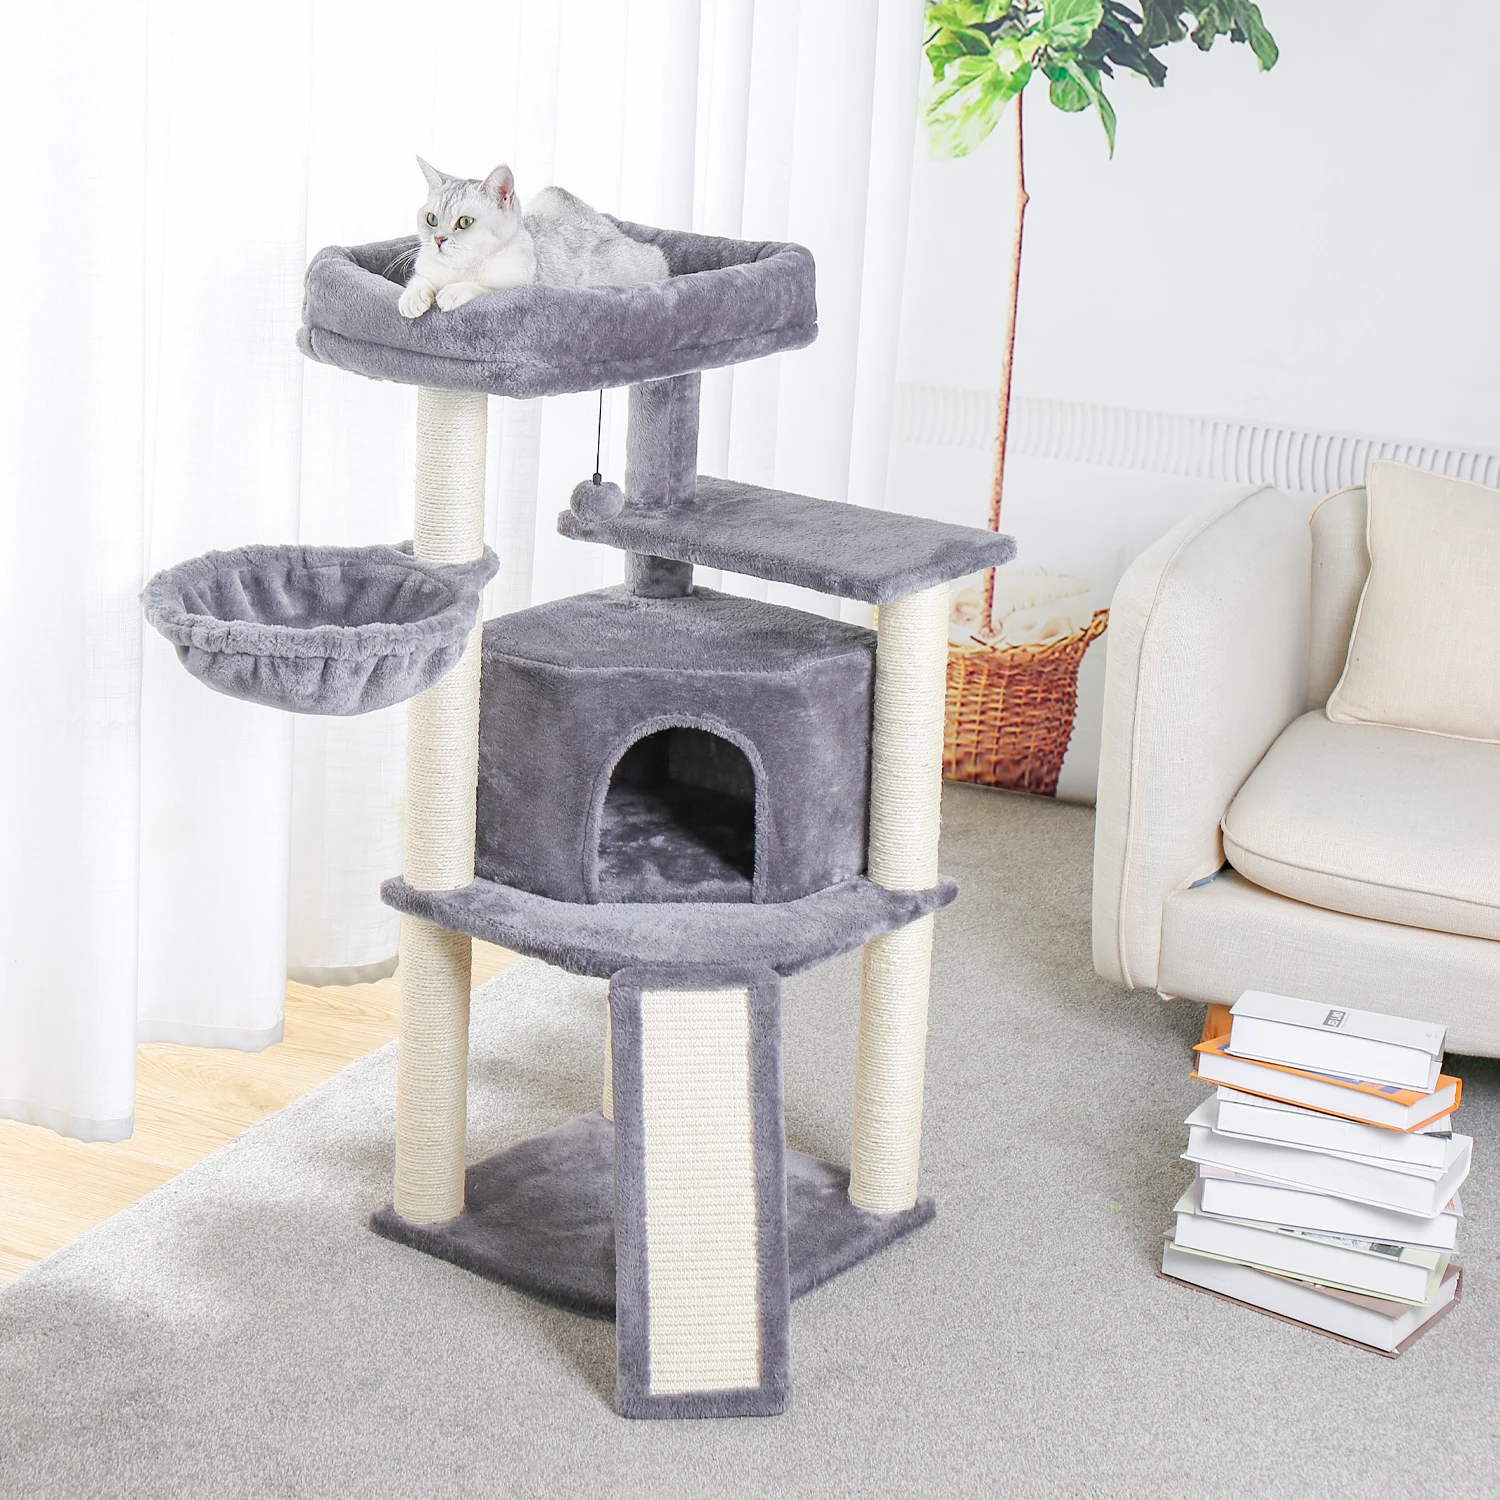 Torre de árbol para gatos y mascotas, rascador para casa, postes para rascar, juguete de escalada, muebles de protección